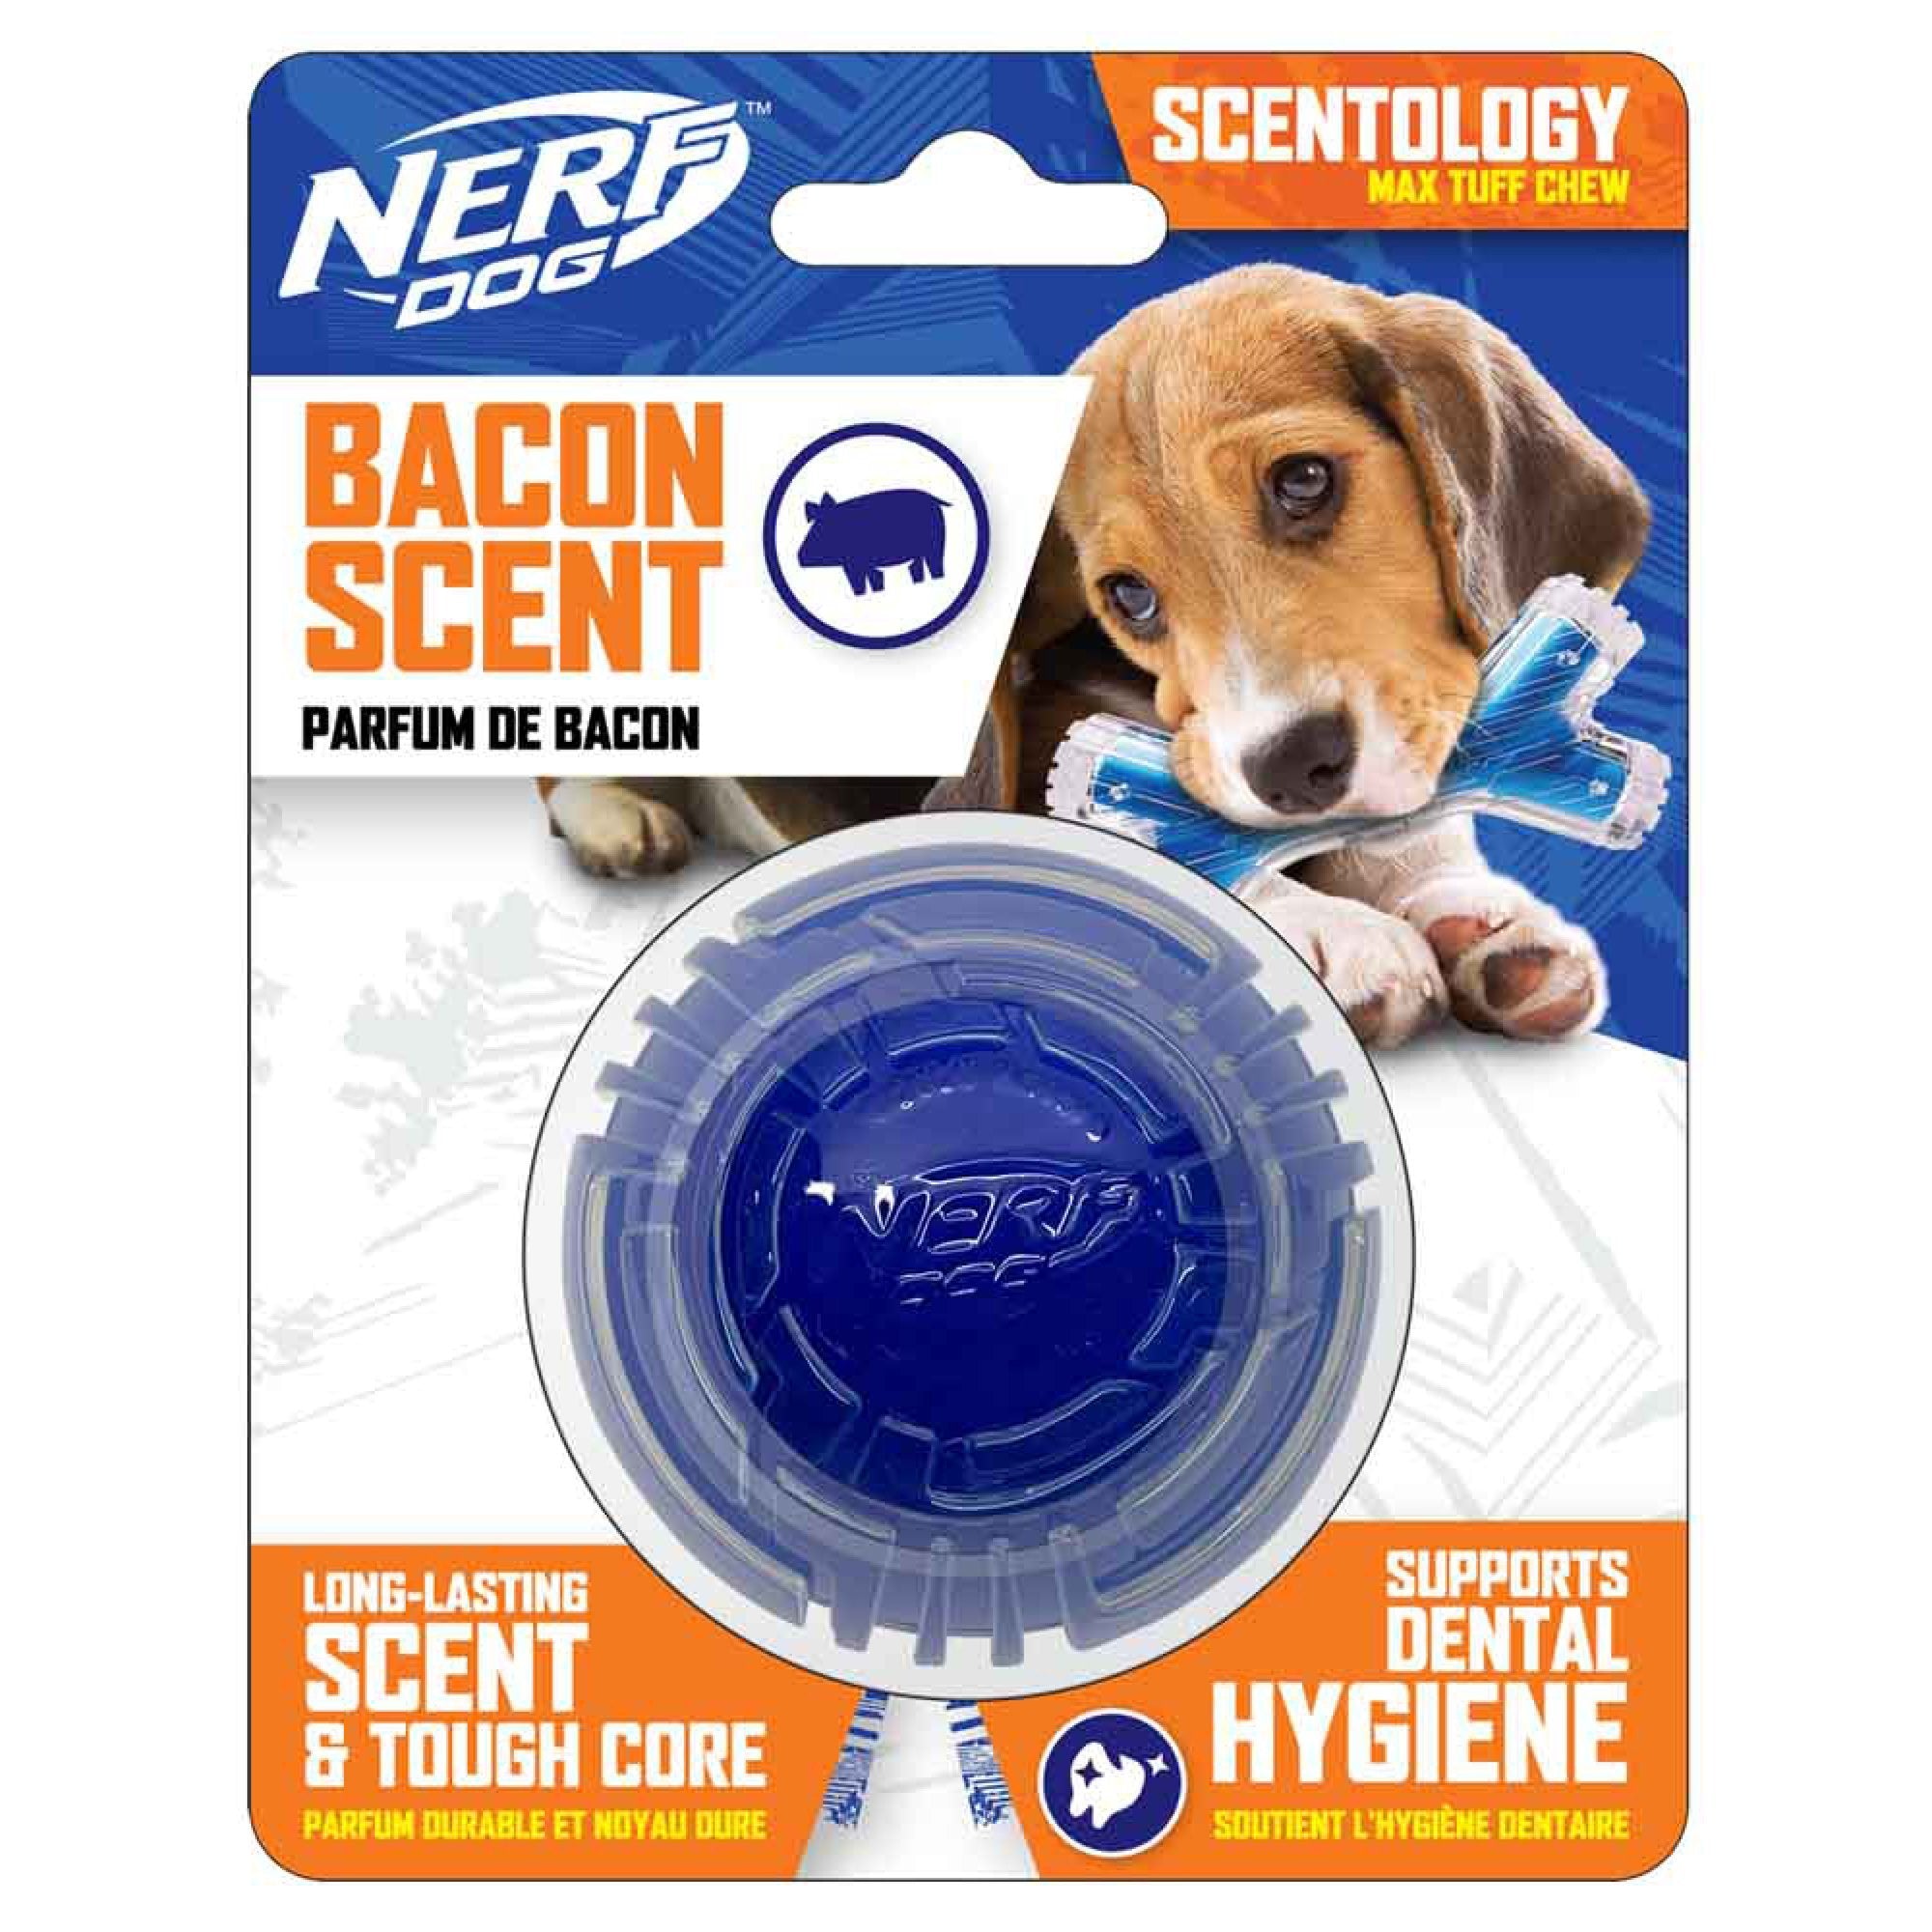 Balle Scentology Nerf Dog, parfum de bacon, bleu, Diam. 6,3 cm (2